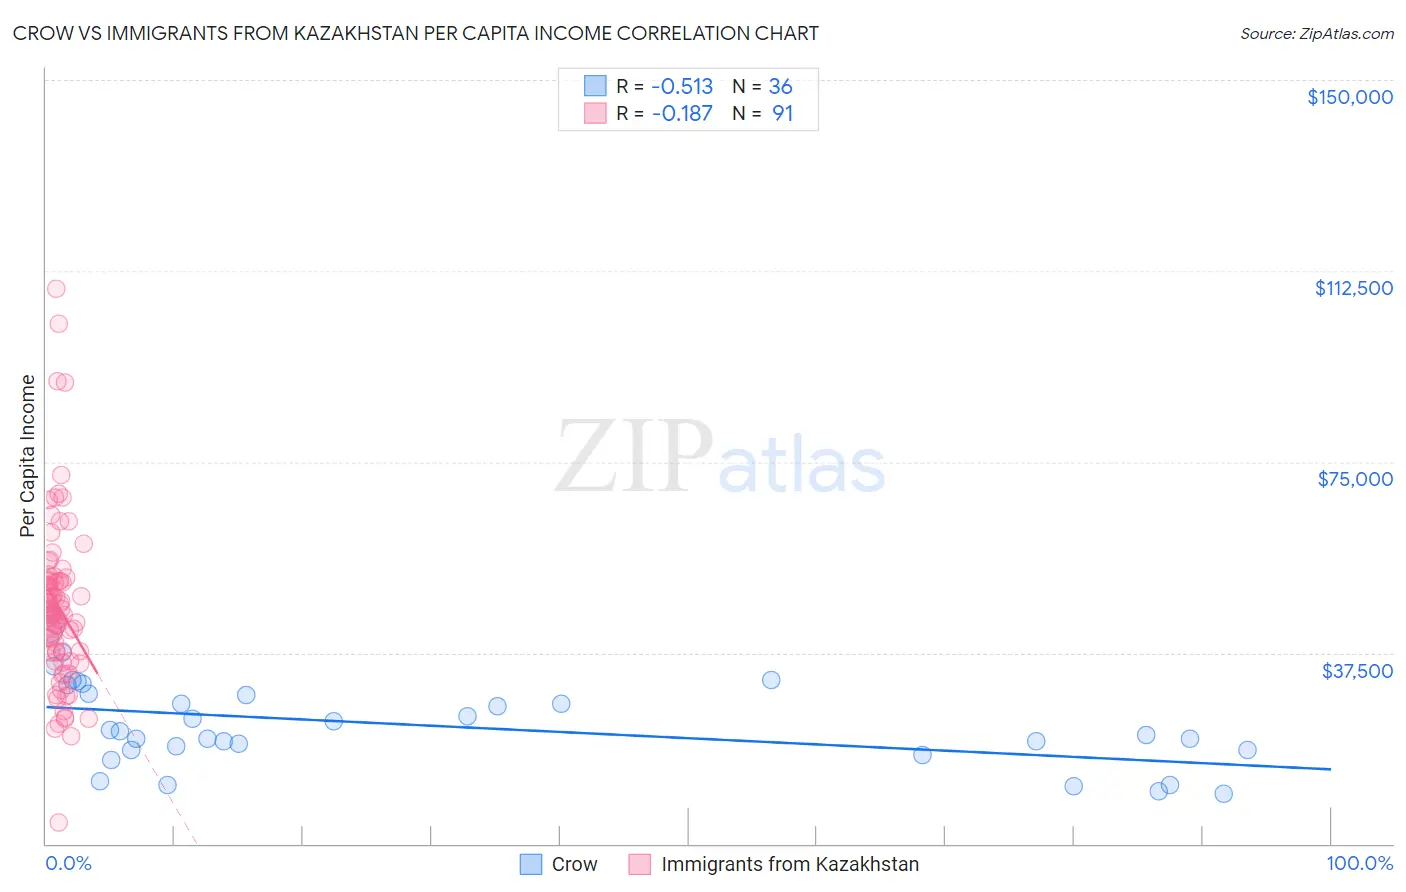 Crow vs Immigrants from Kazakhstan Per Capita Income